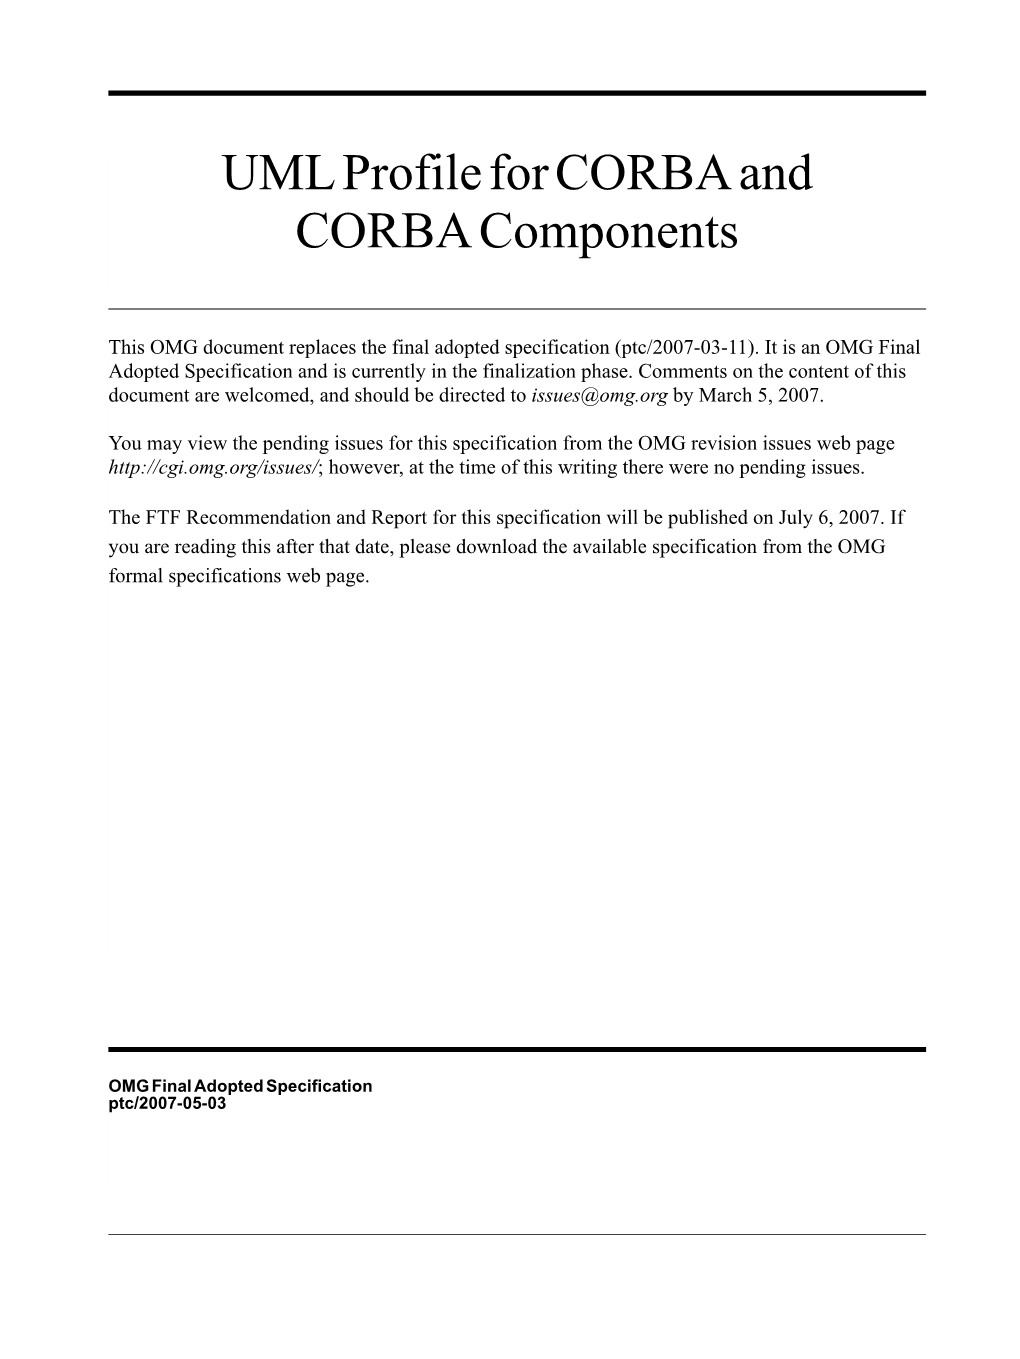 The UML Profile for CORBA and CORBA Components